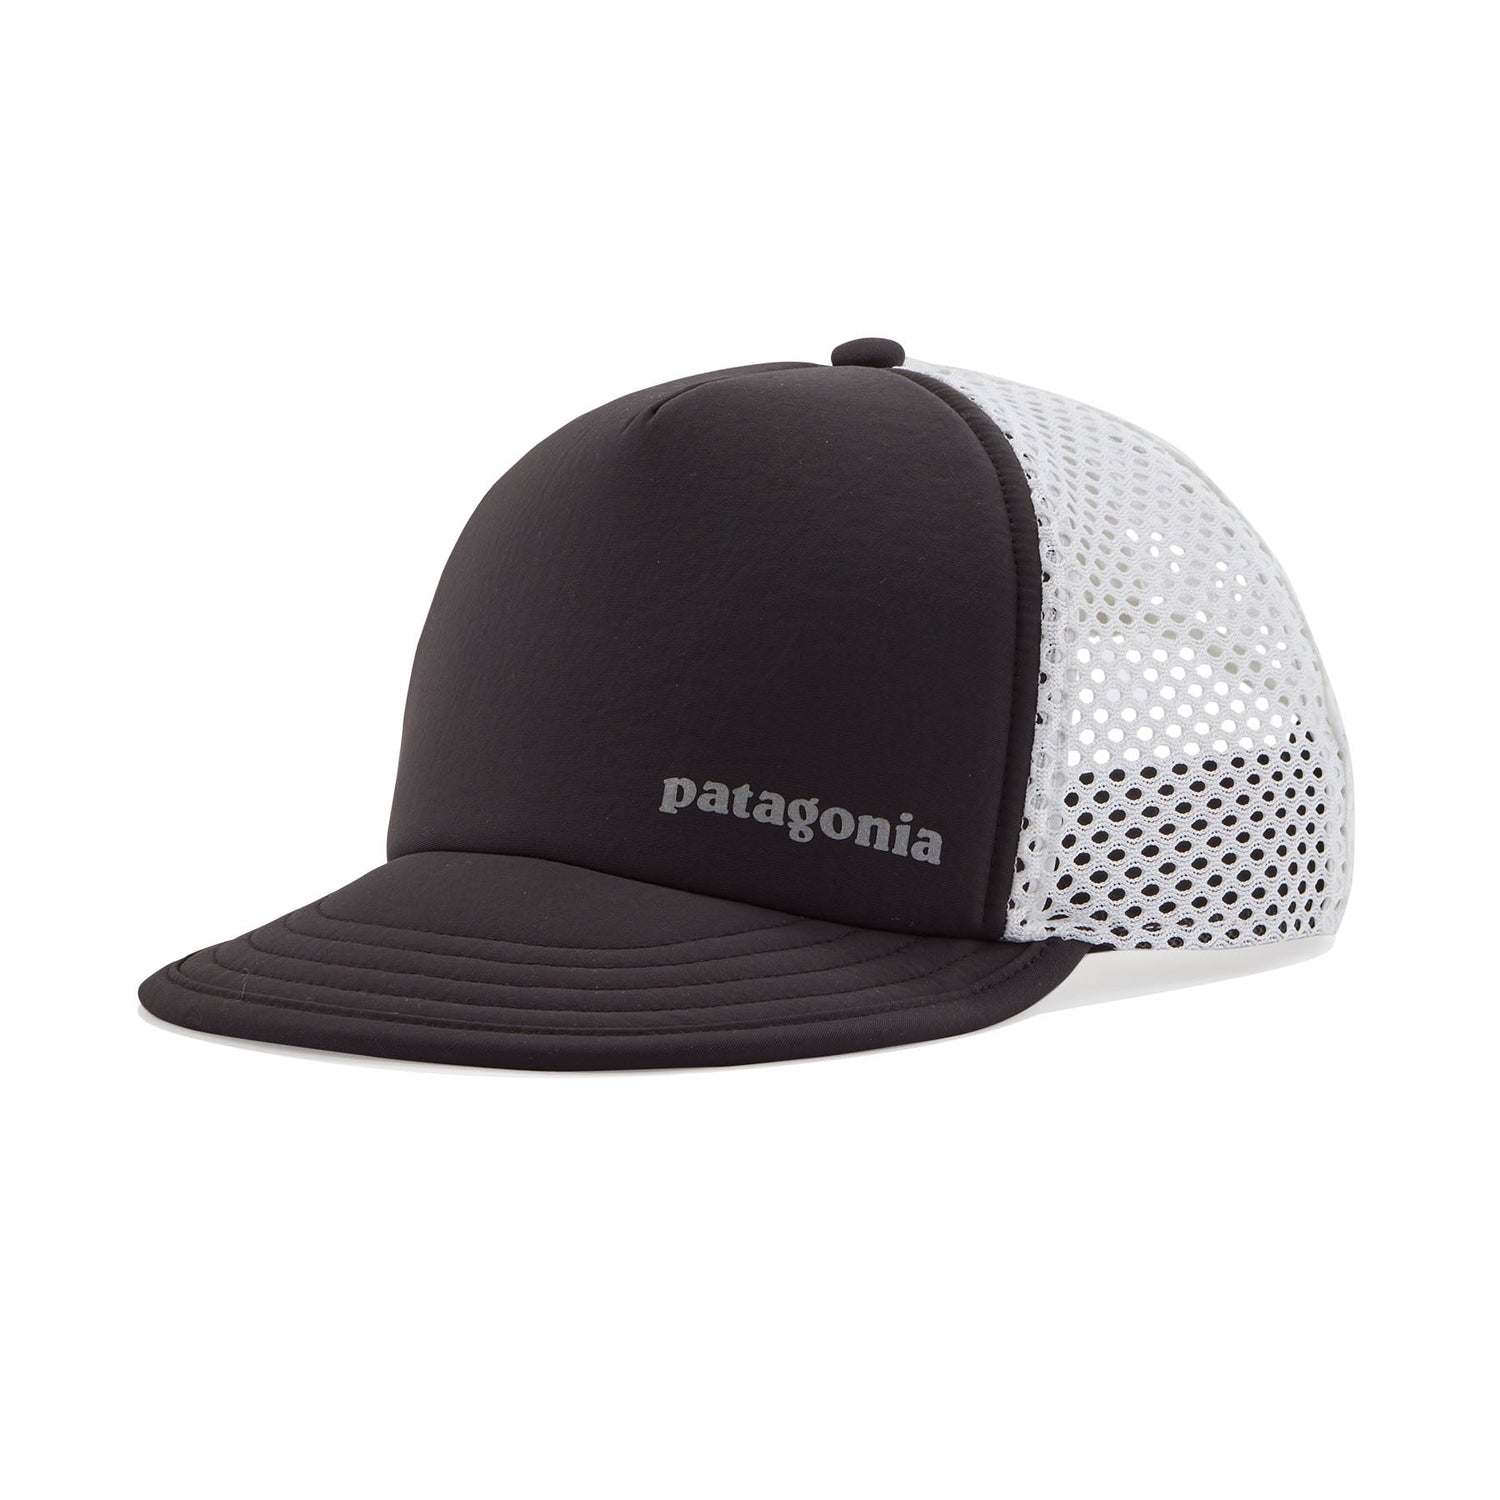 Patagonia Duckbill Shorty Trucker Hat - Recycled Nylon Black Headwear